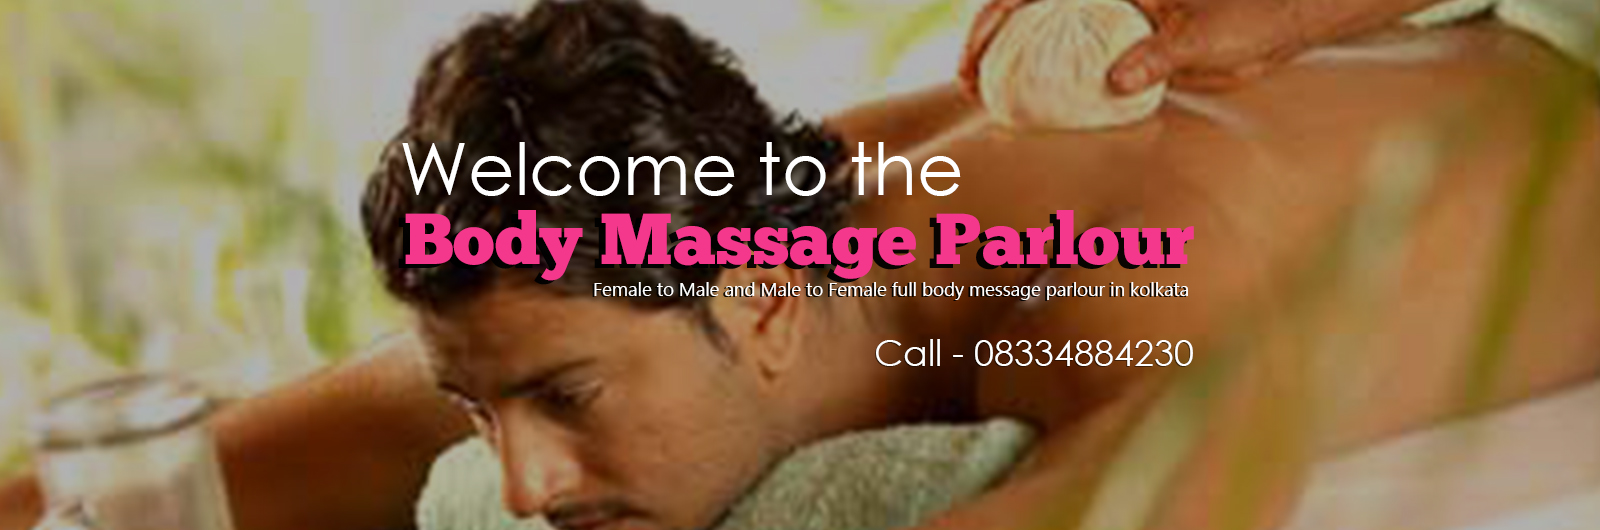 Body to Body Massage Parlour in Kolkata